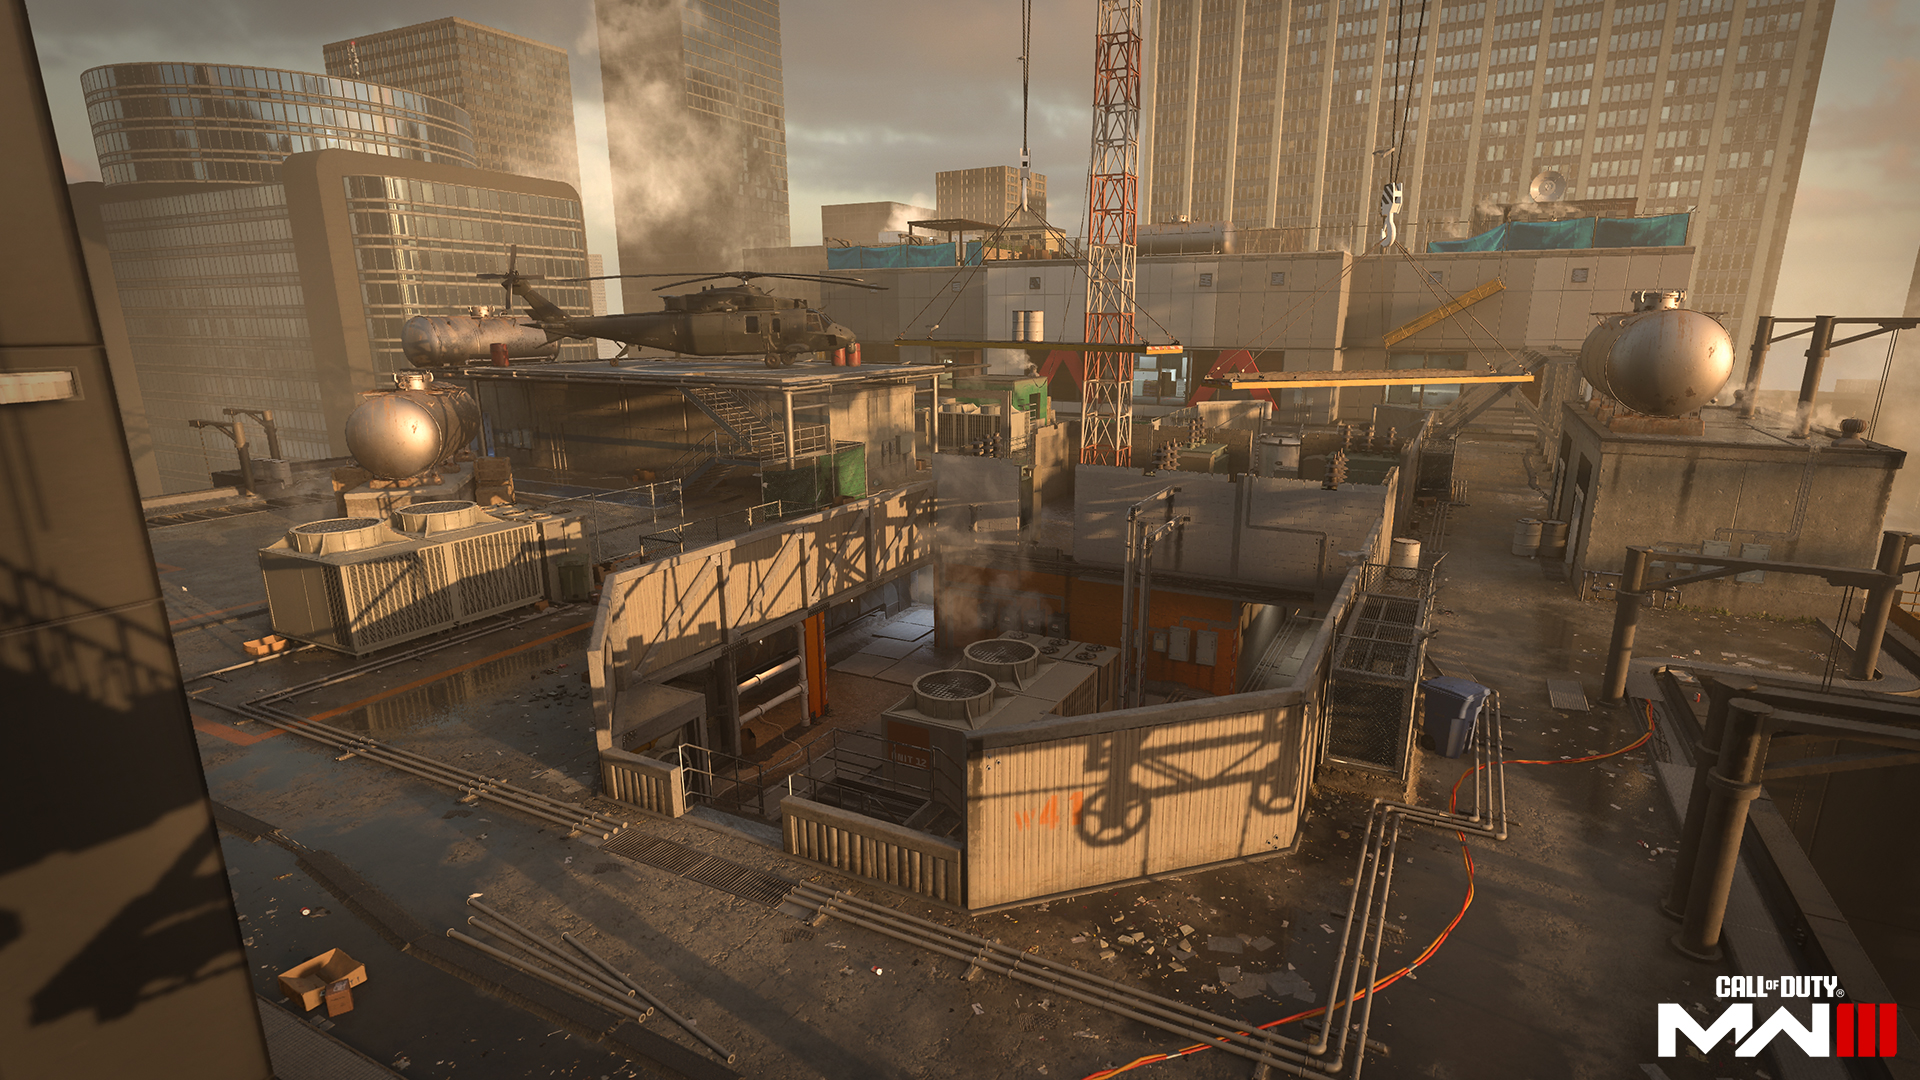 Call of Duty: Modern Warfare III Multiplayer Trailer Is Now